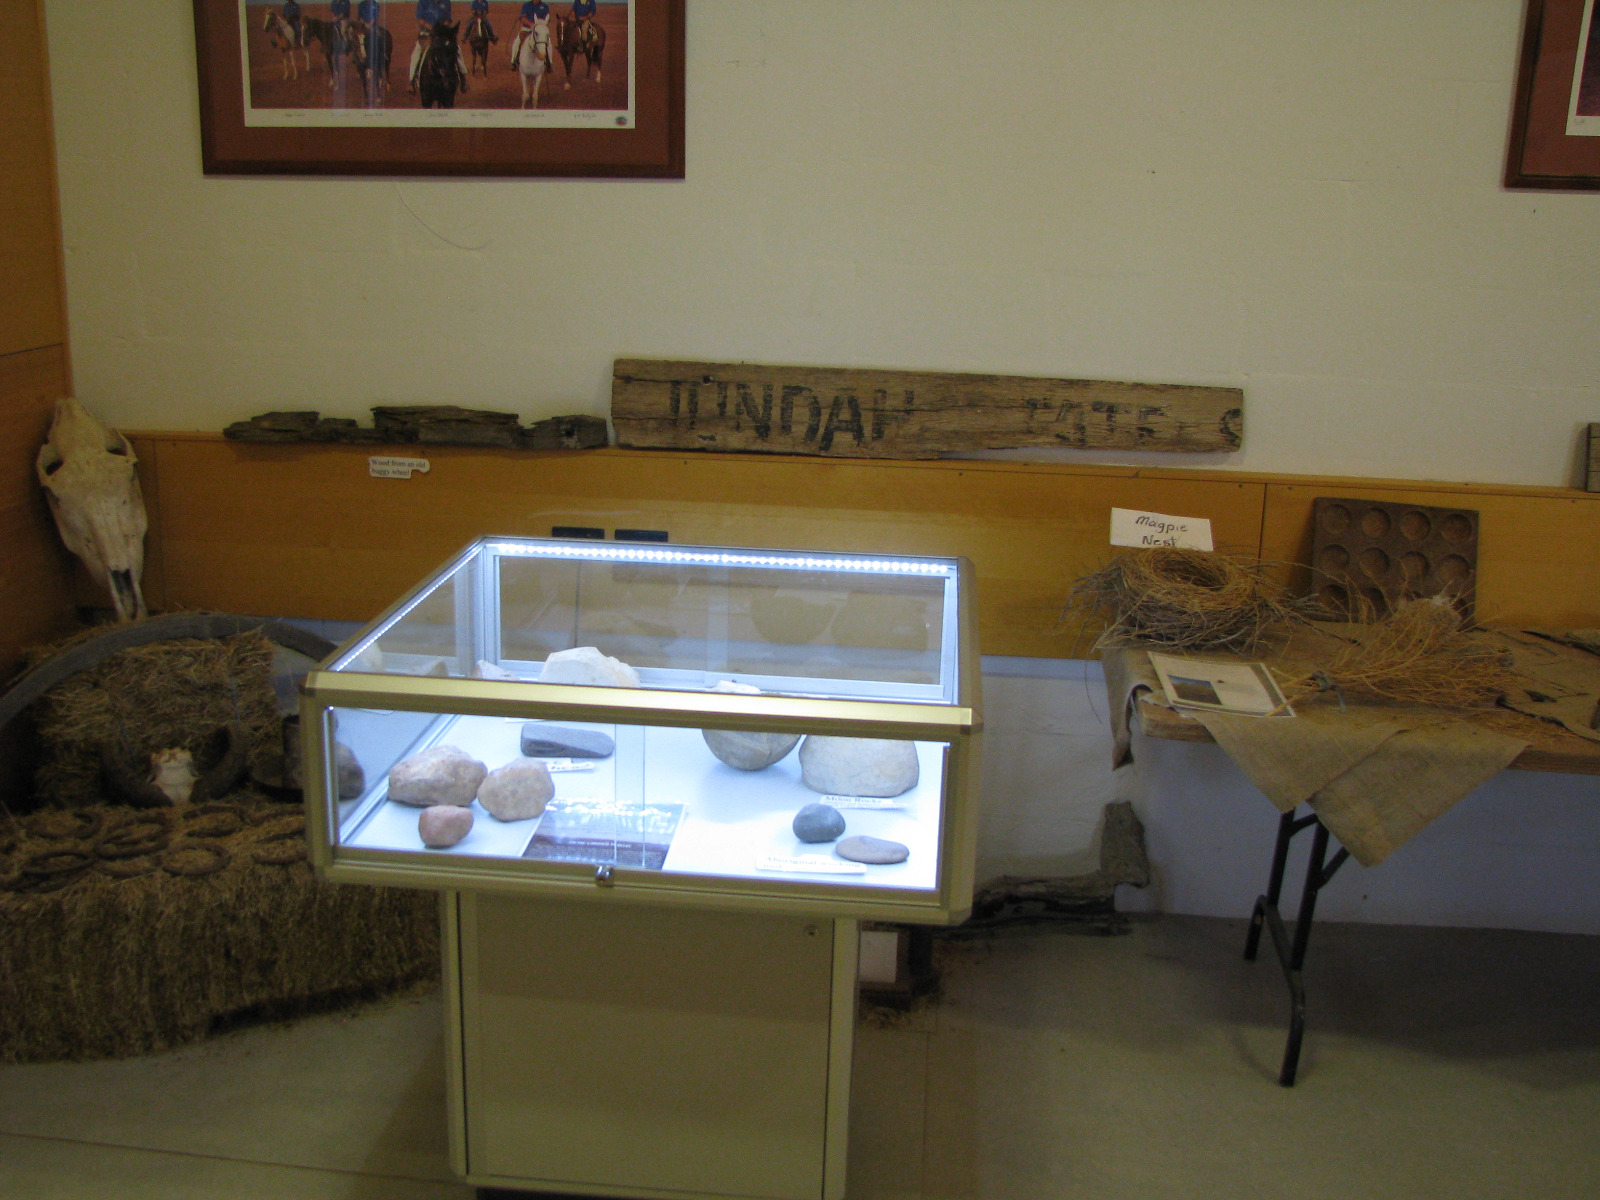 A Mushroom Display Case with aboriginal artefacts